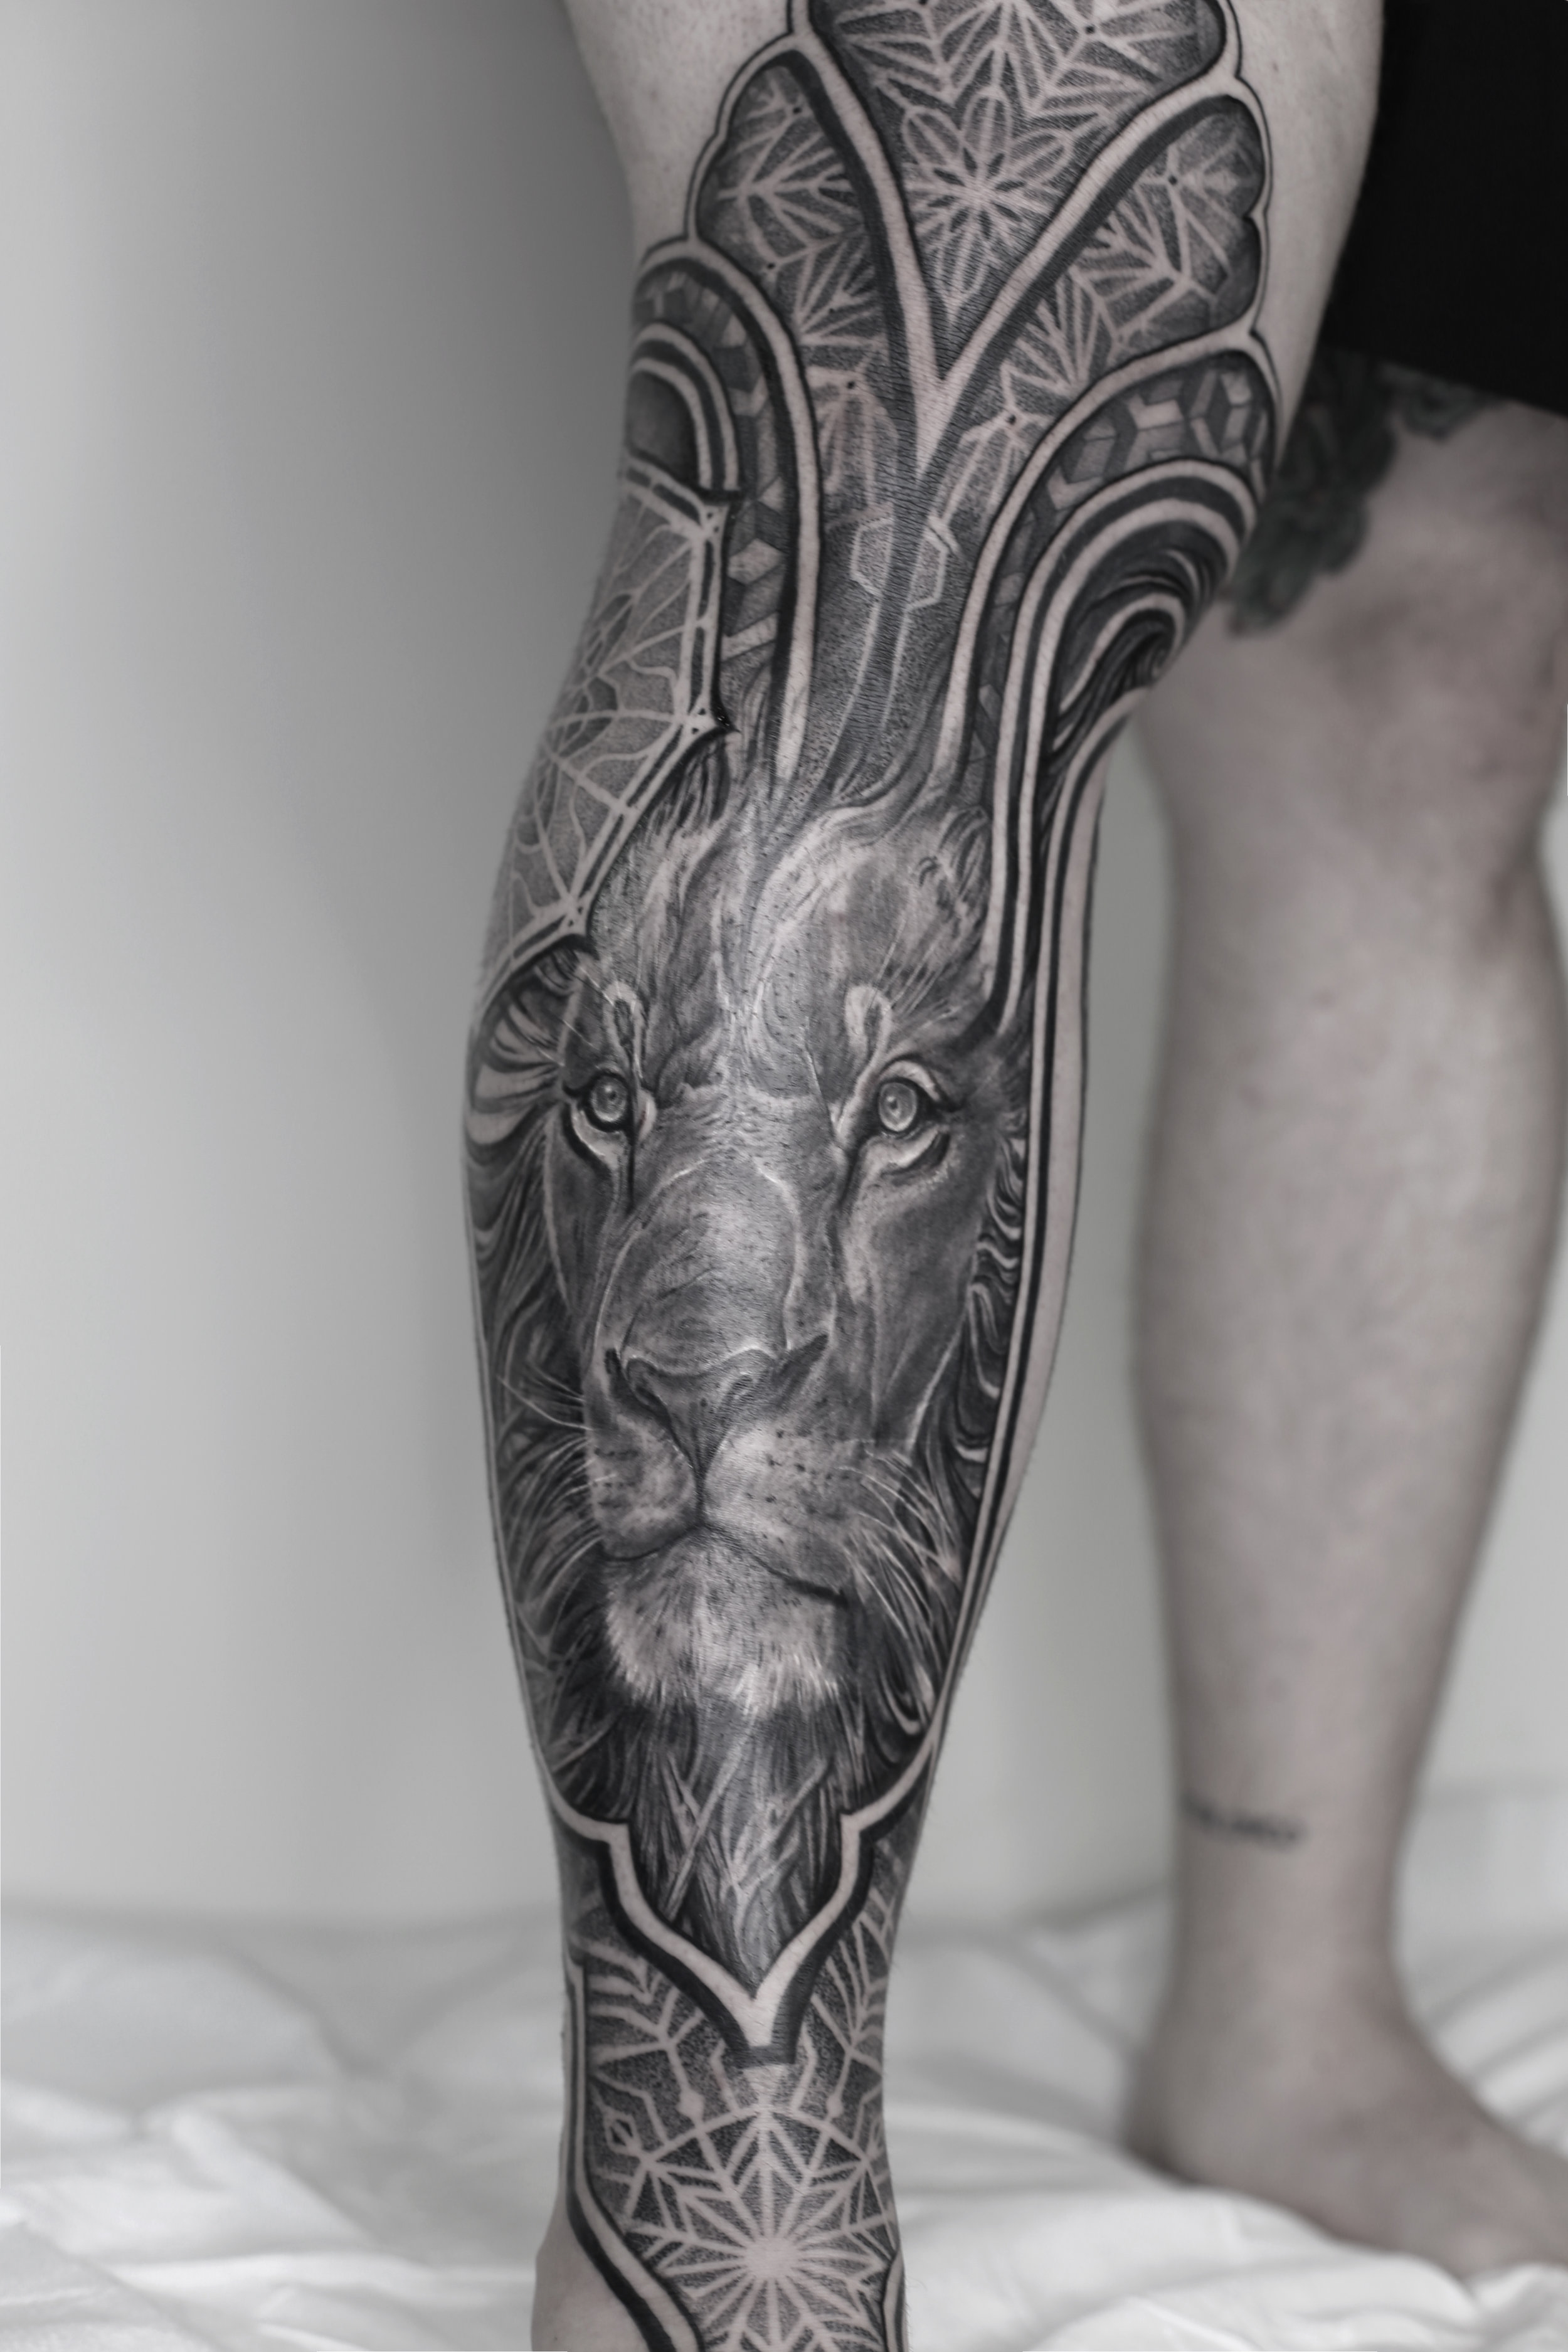 lion ejay tattoo singleton tattoo trinity groves leg sleeve .jpg